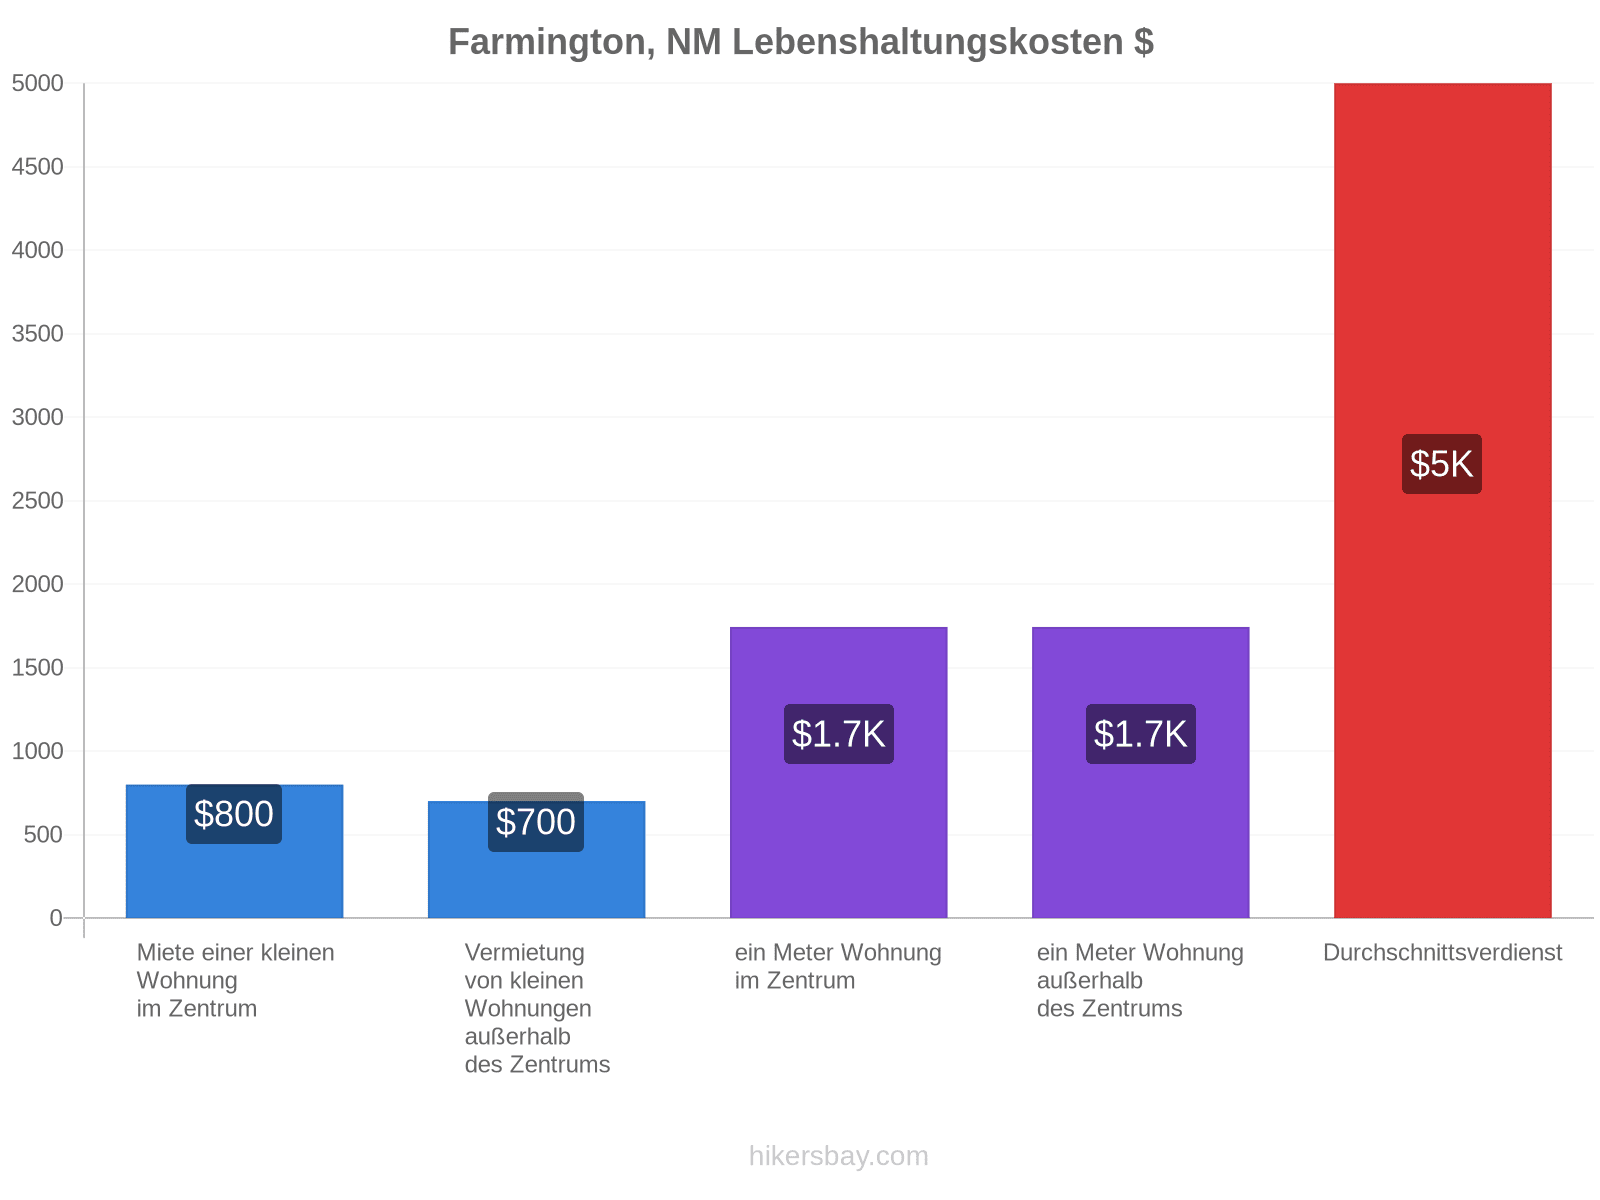 Farmington, NM Lebenshaltungskosten hikersbay.com